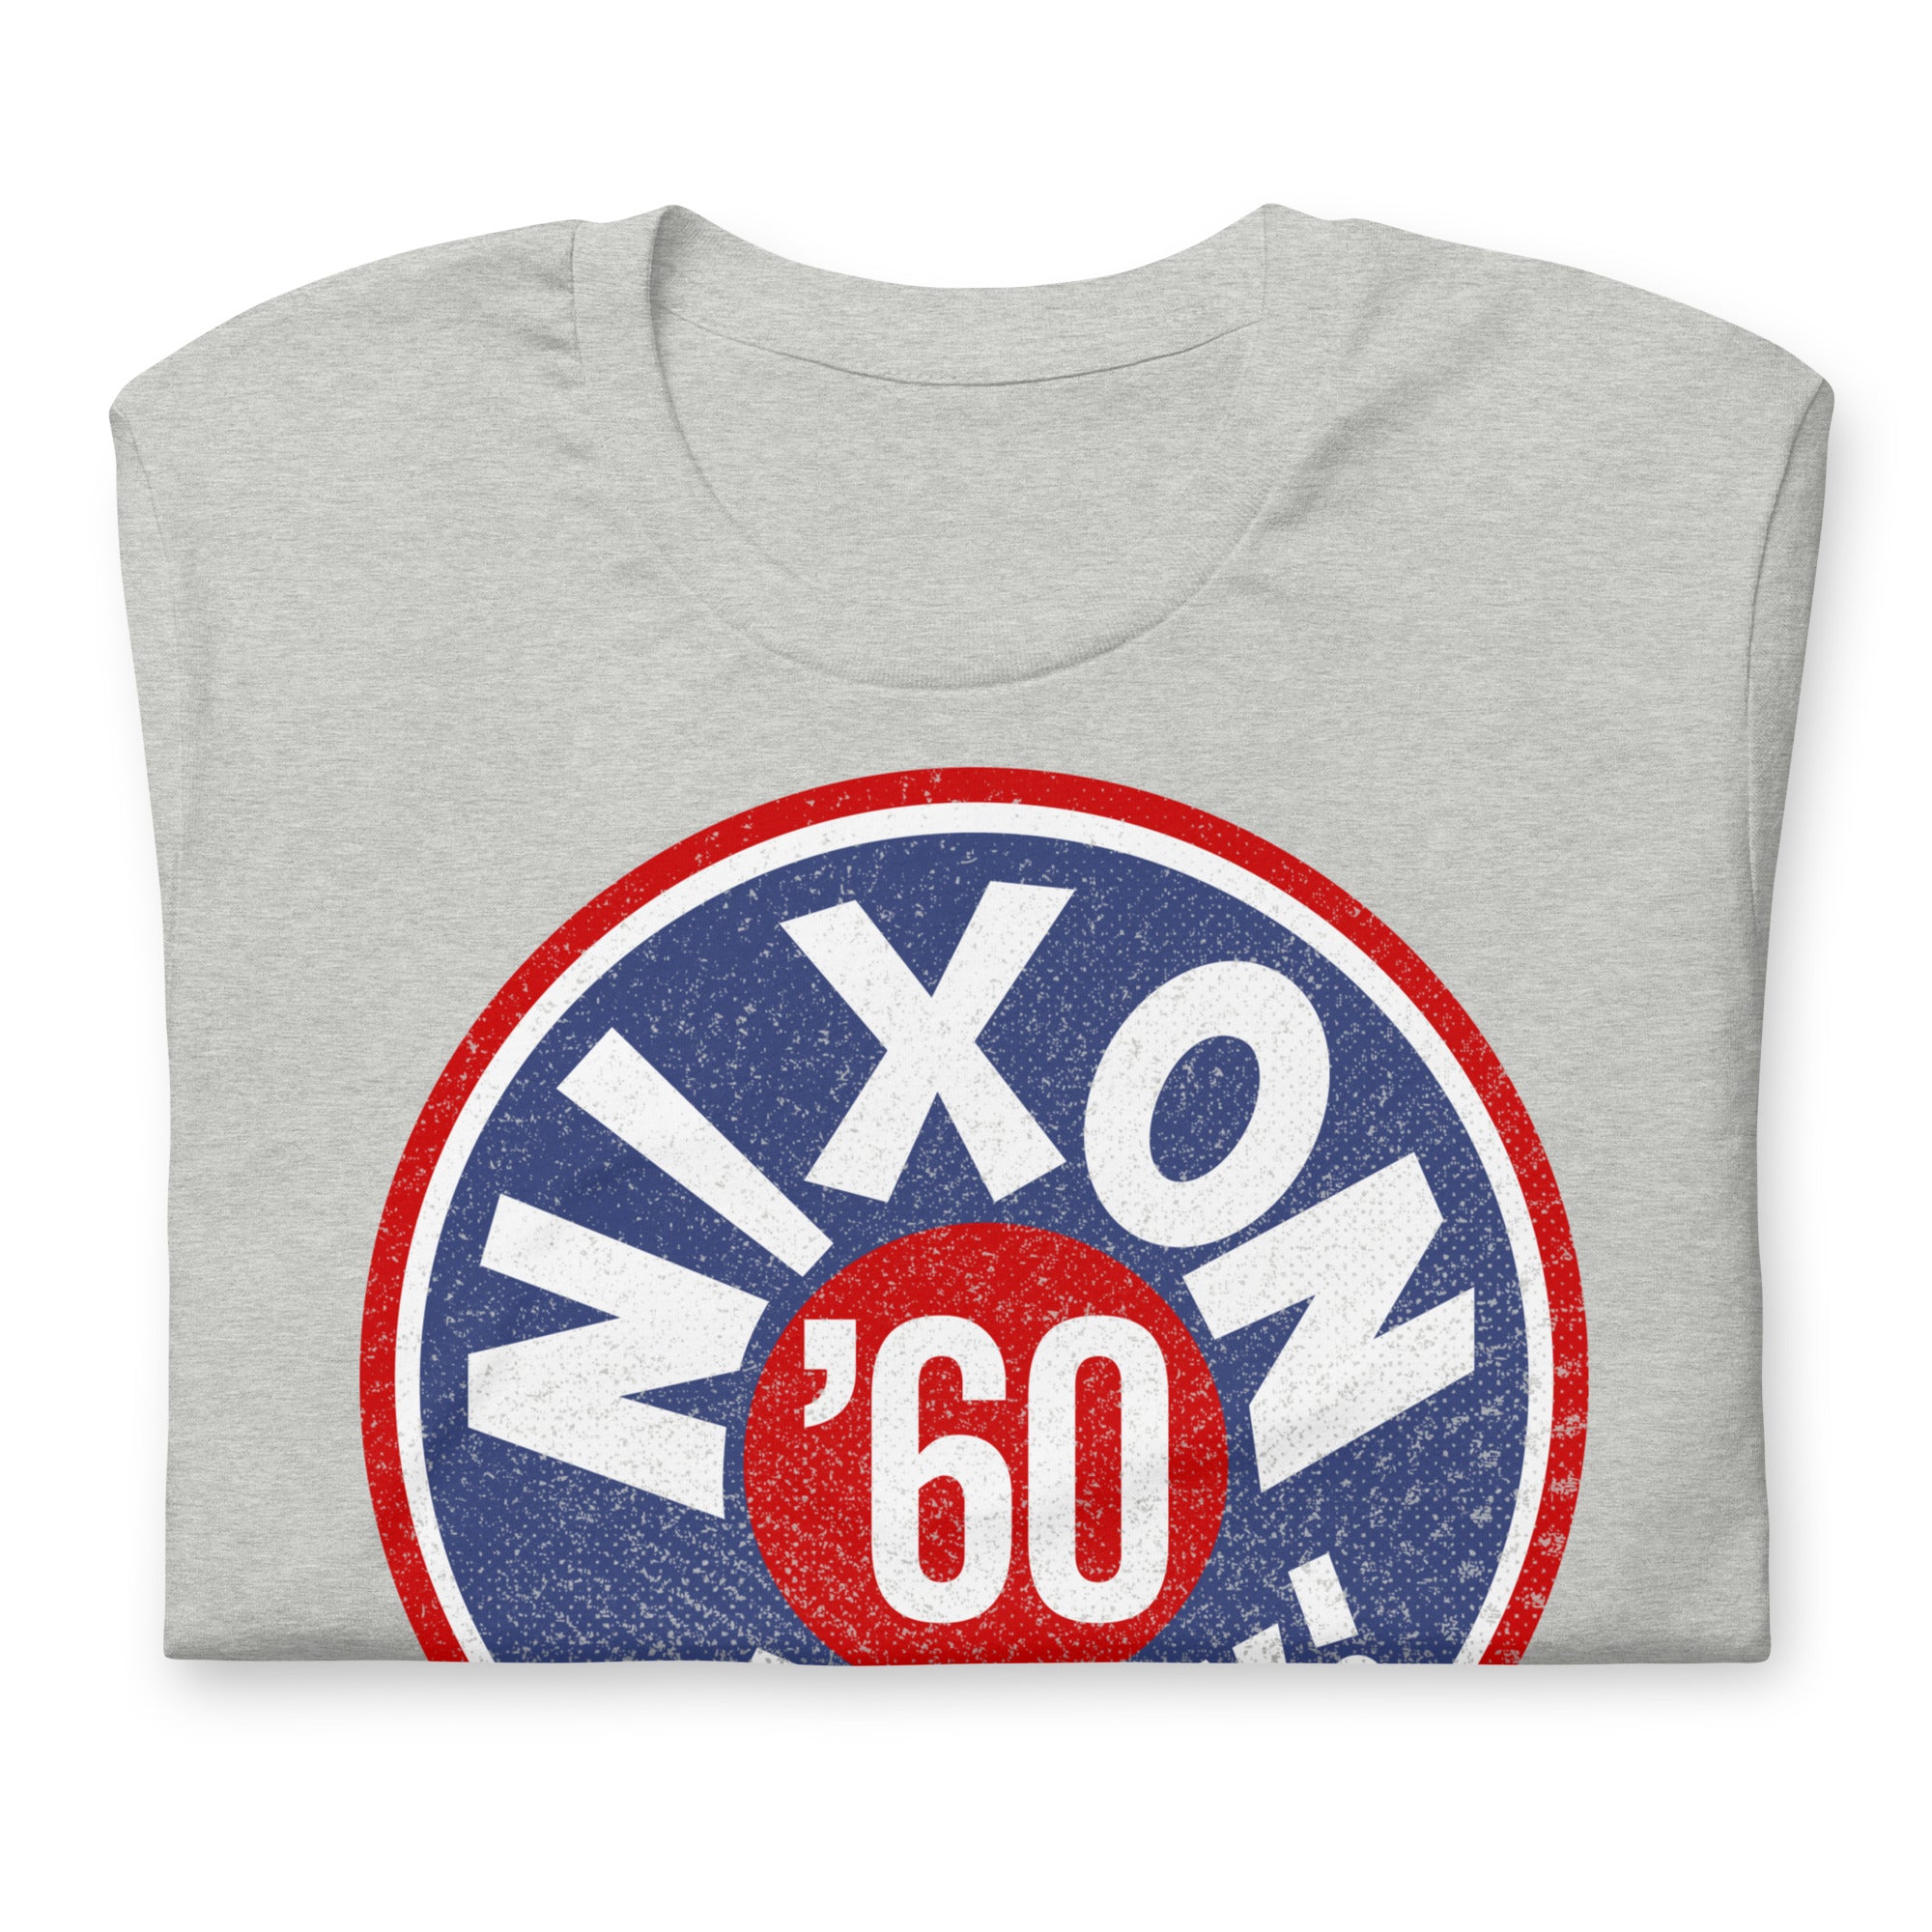 Nixon Now Retro 1960 Campaign T-Shirt